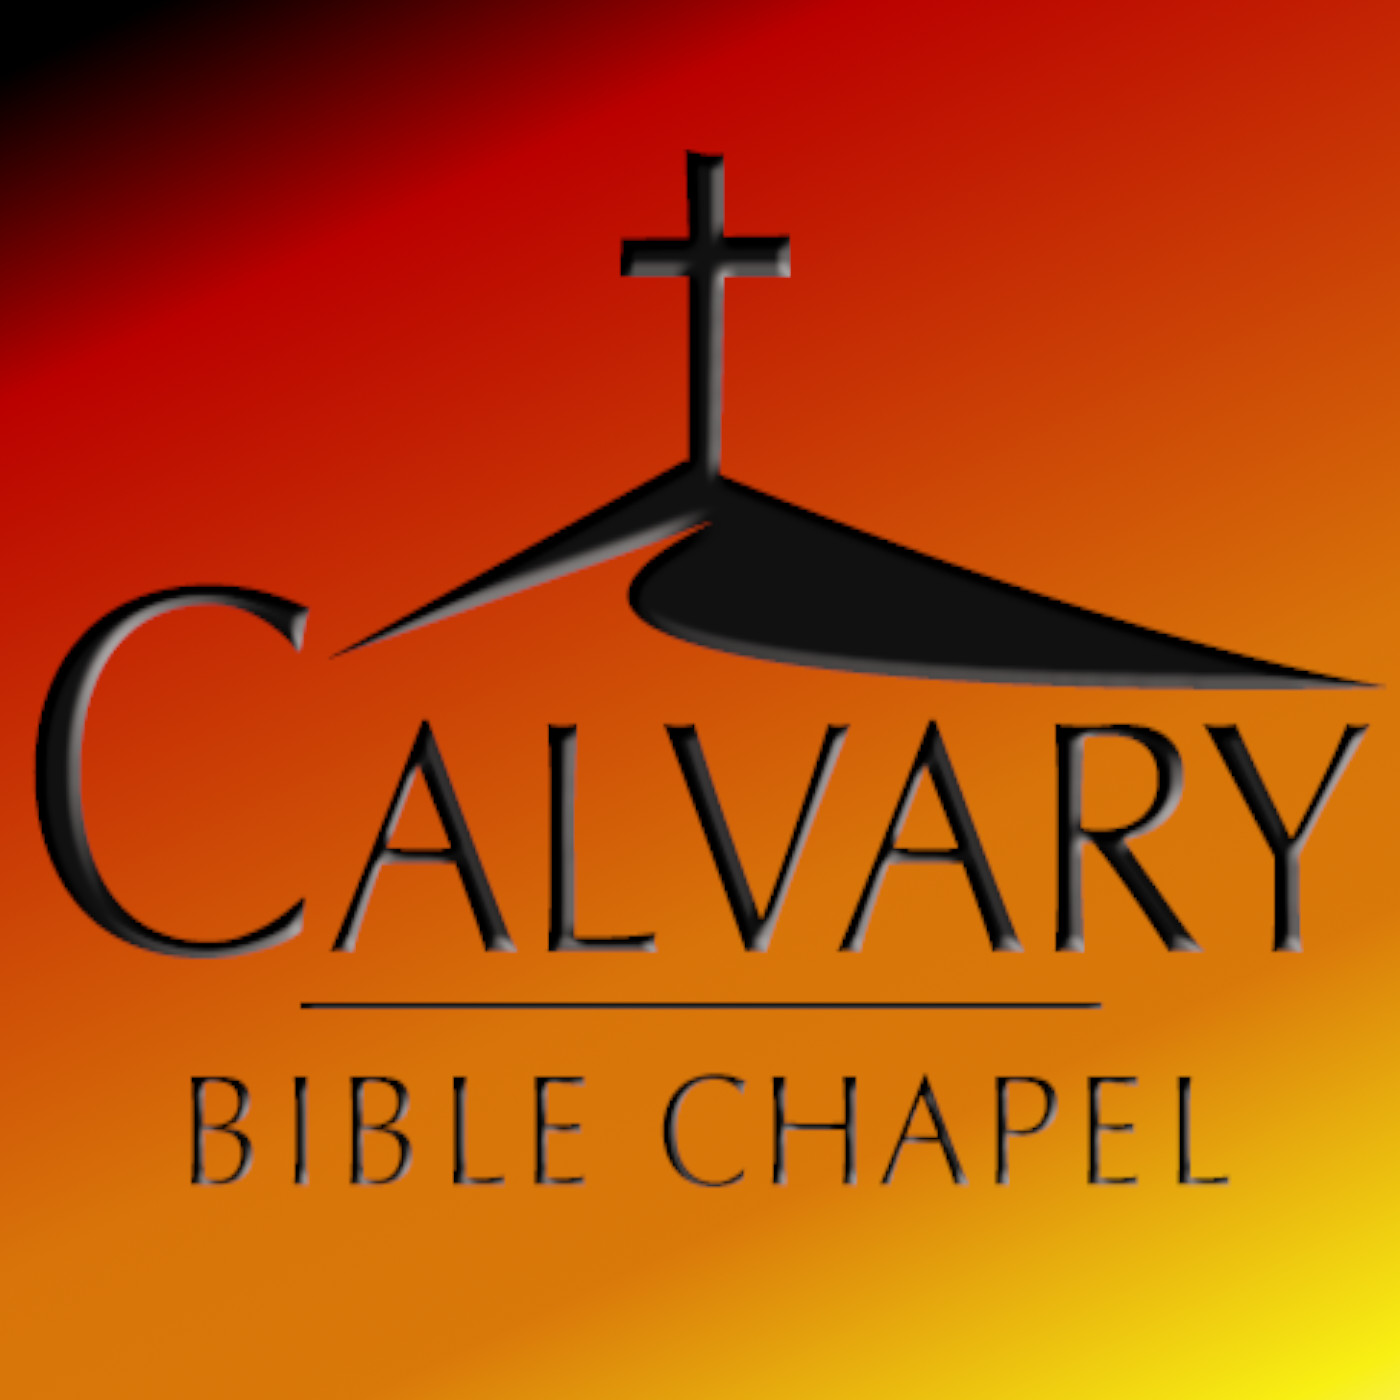 Calvary Bible Chapel